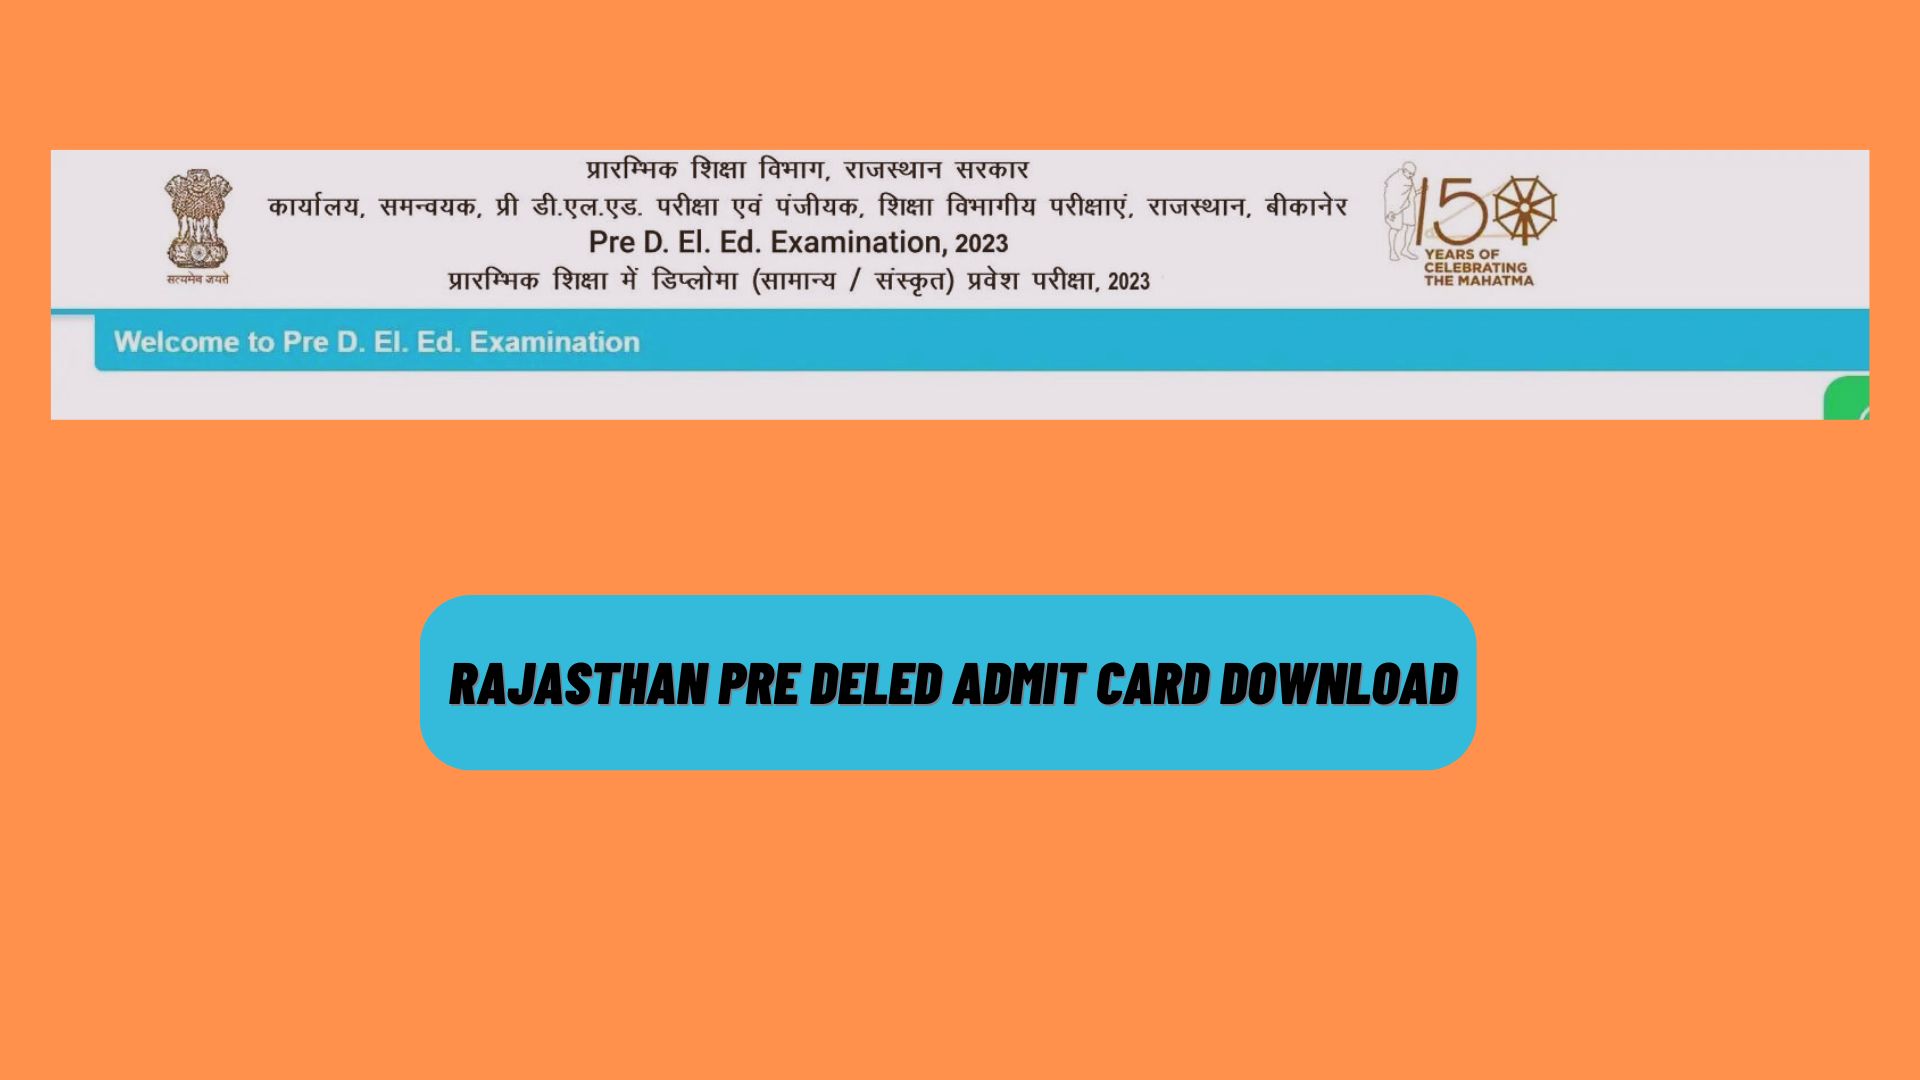 Rajasthan Pre DElEd Admit Card